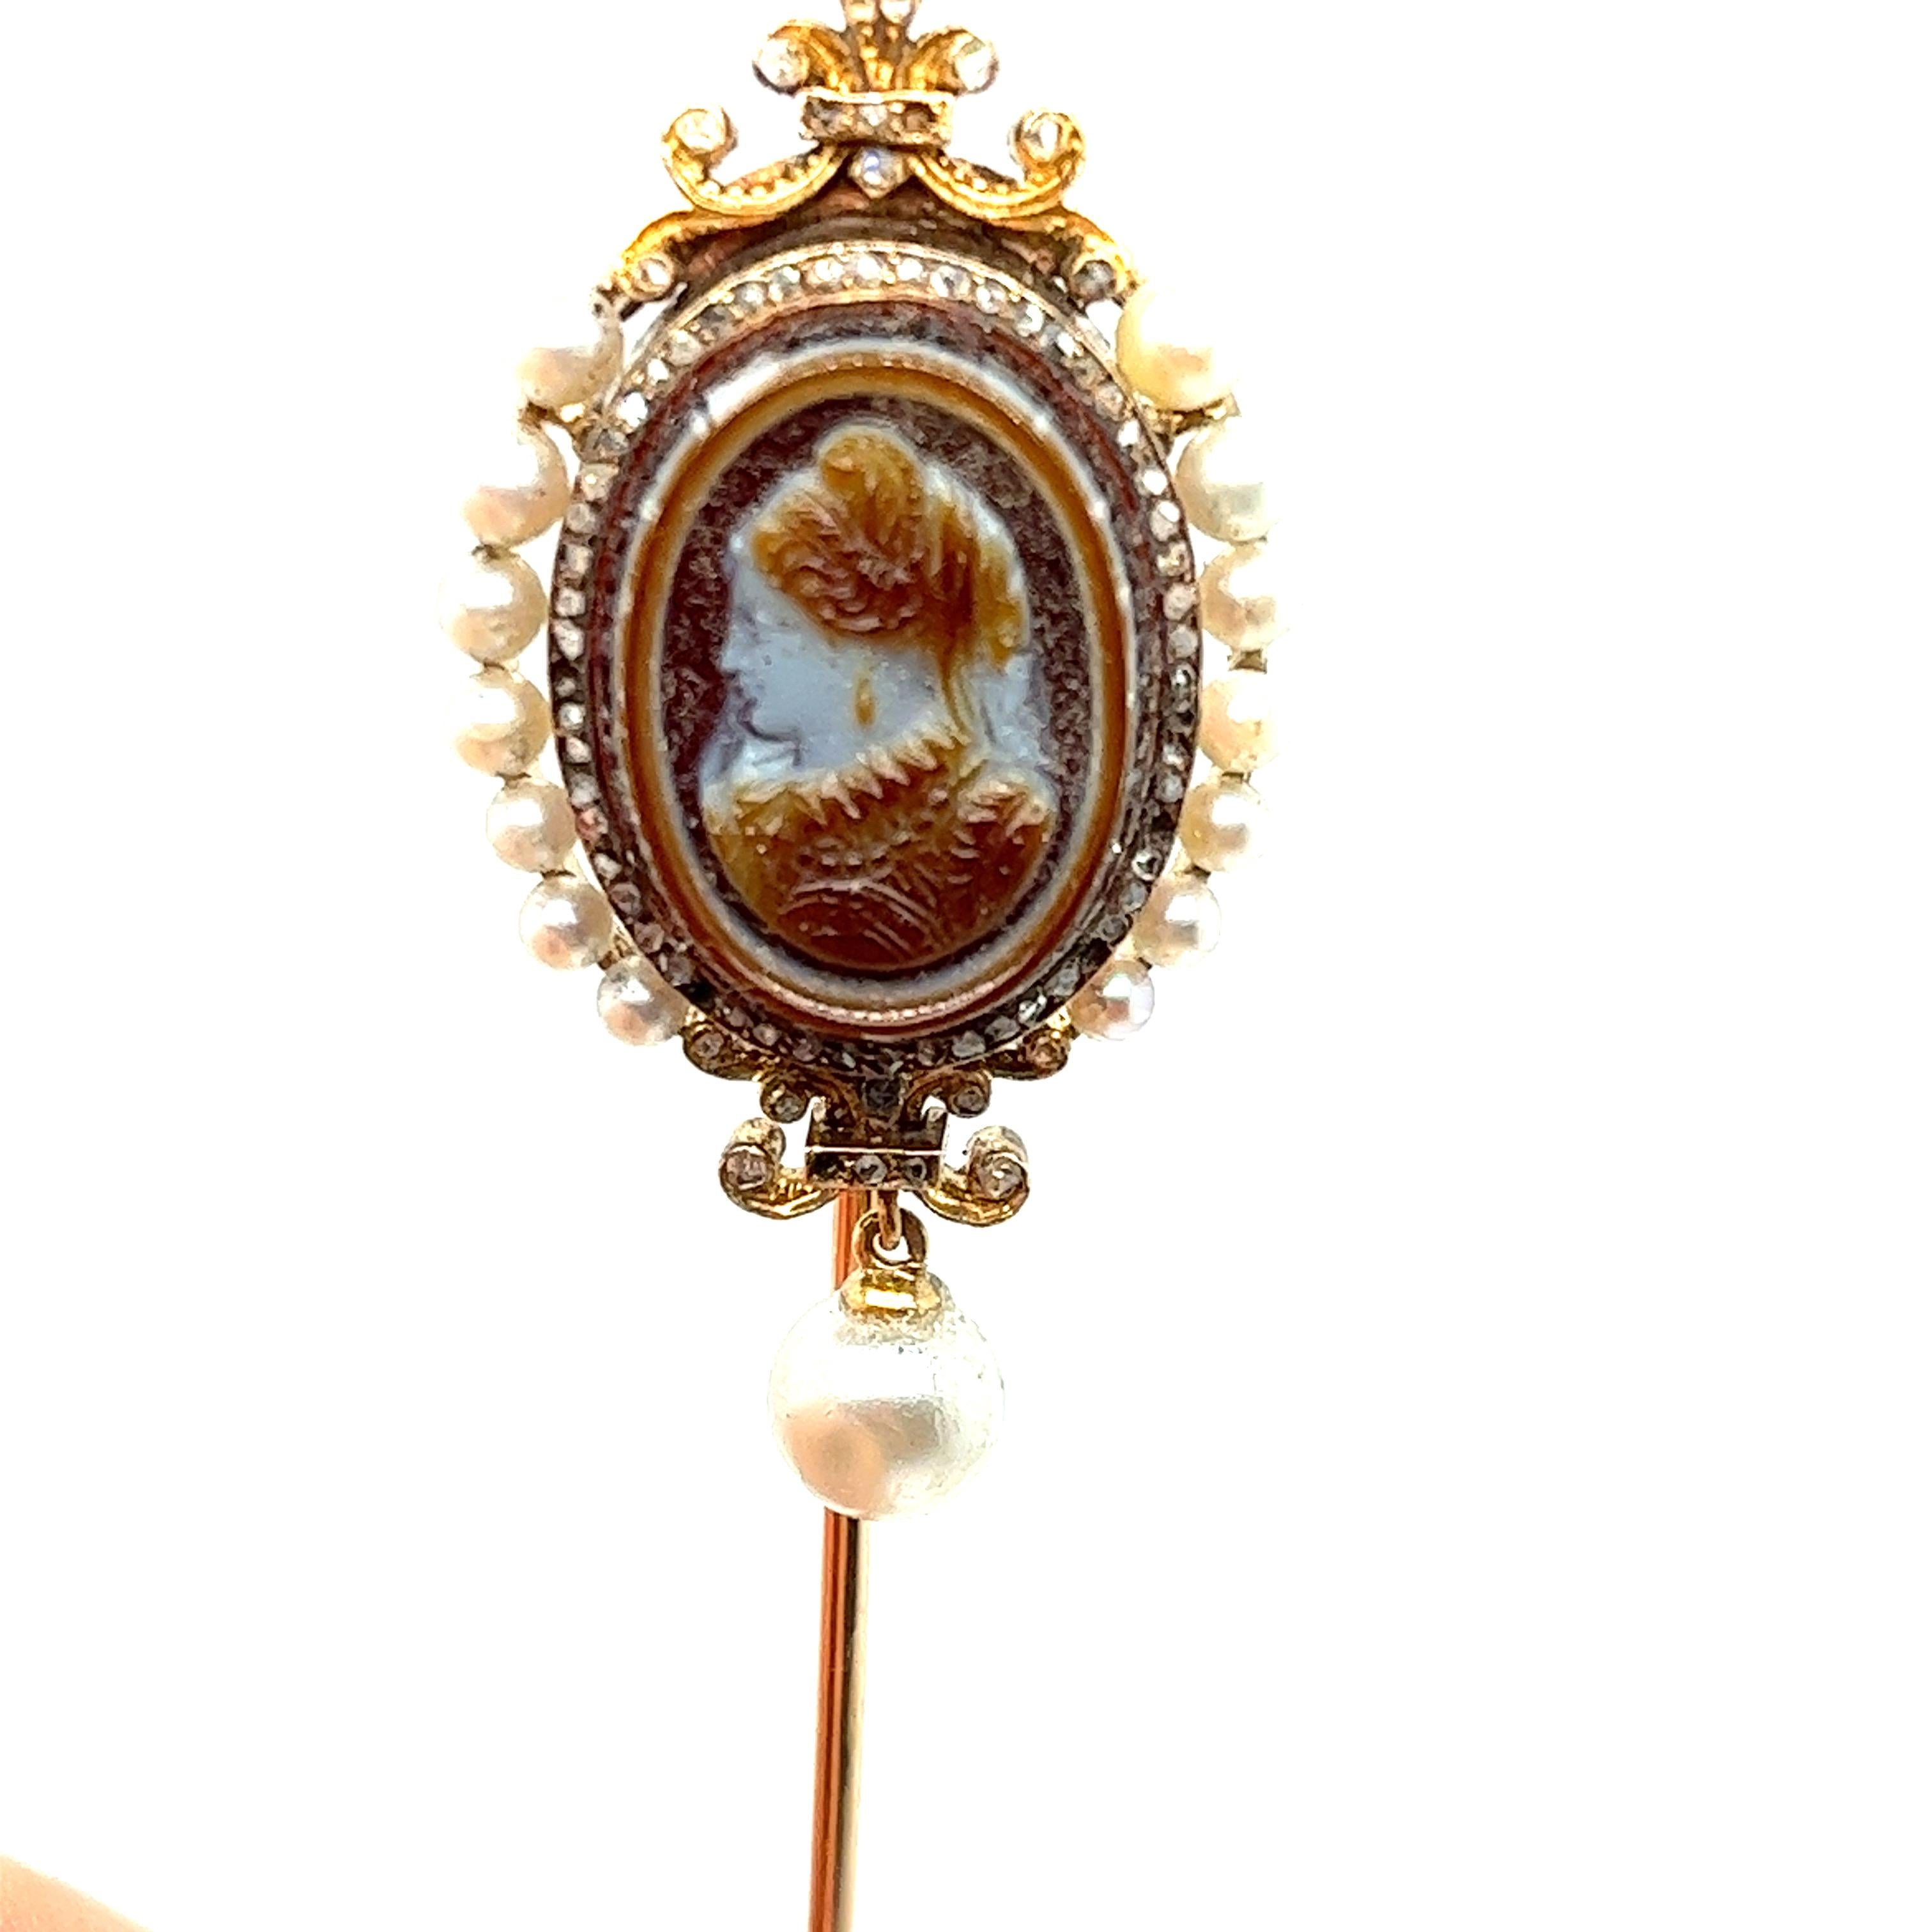 Rare Antique Sardonyx Cameo Pin - 18K Gold, Diamonds, and Pearls, Circa 1850. For Sale 1